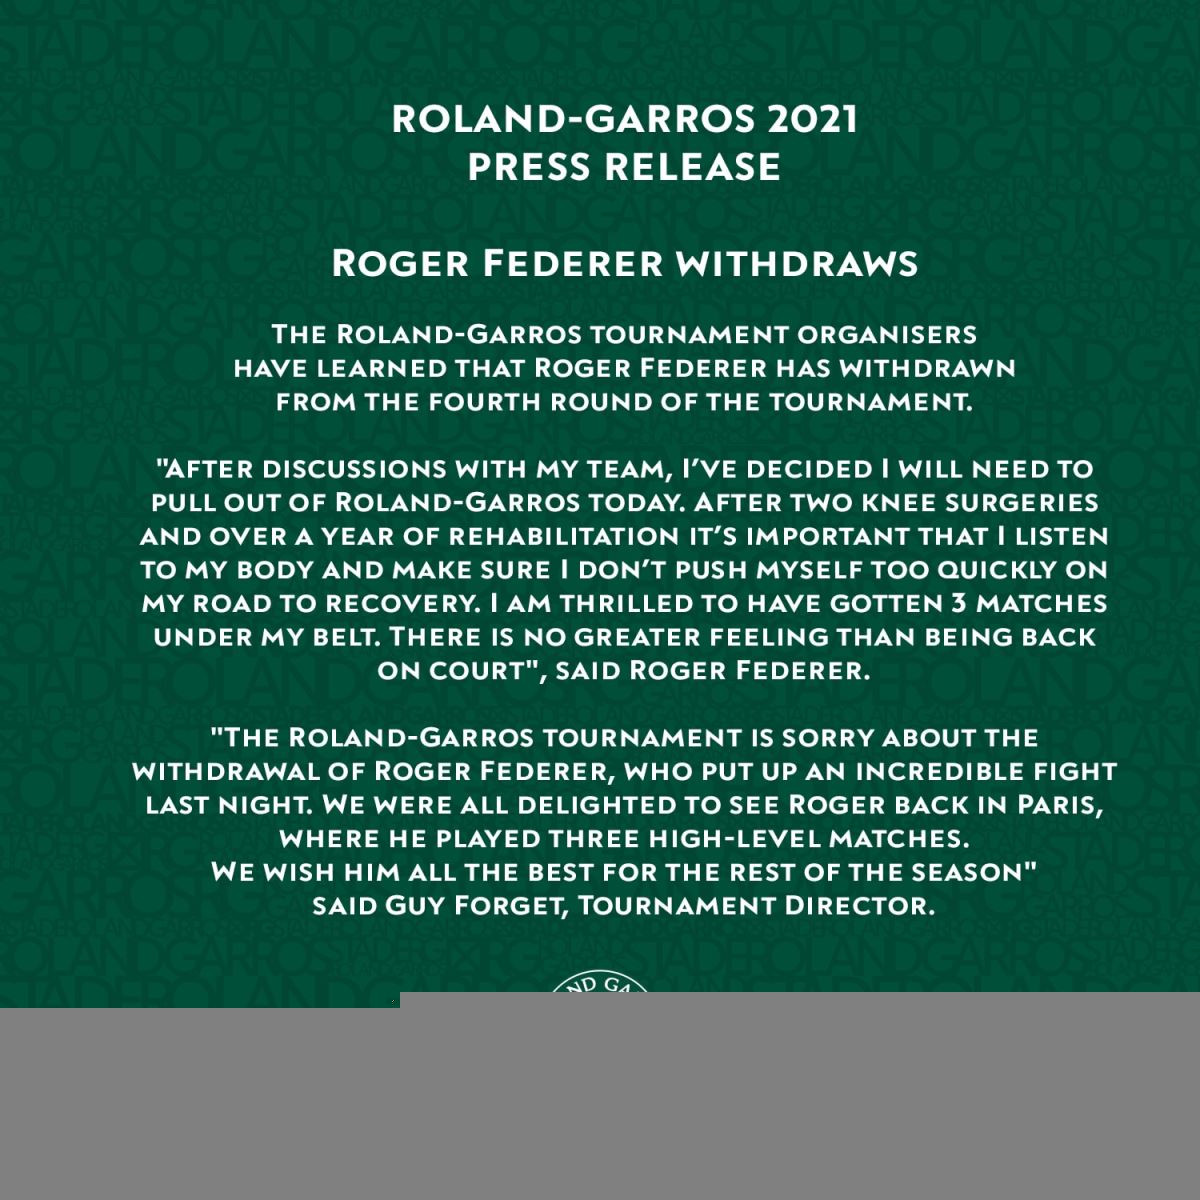 Federer bất ngờ rút khỏi Roland Garros 2021, quyết dồn sức cho Wimbledon-3